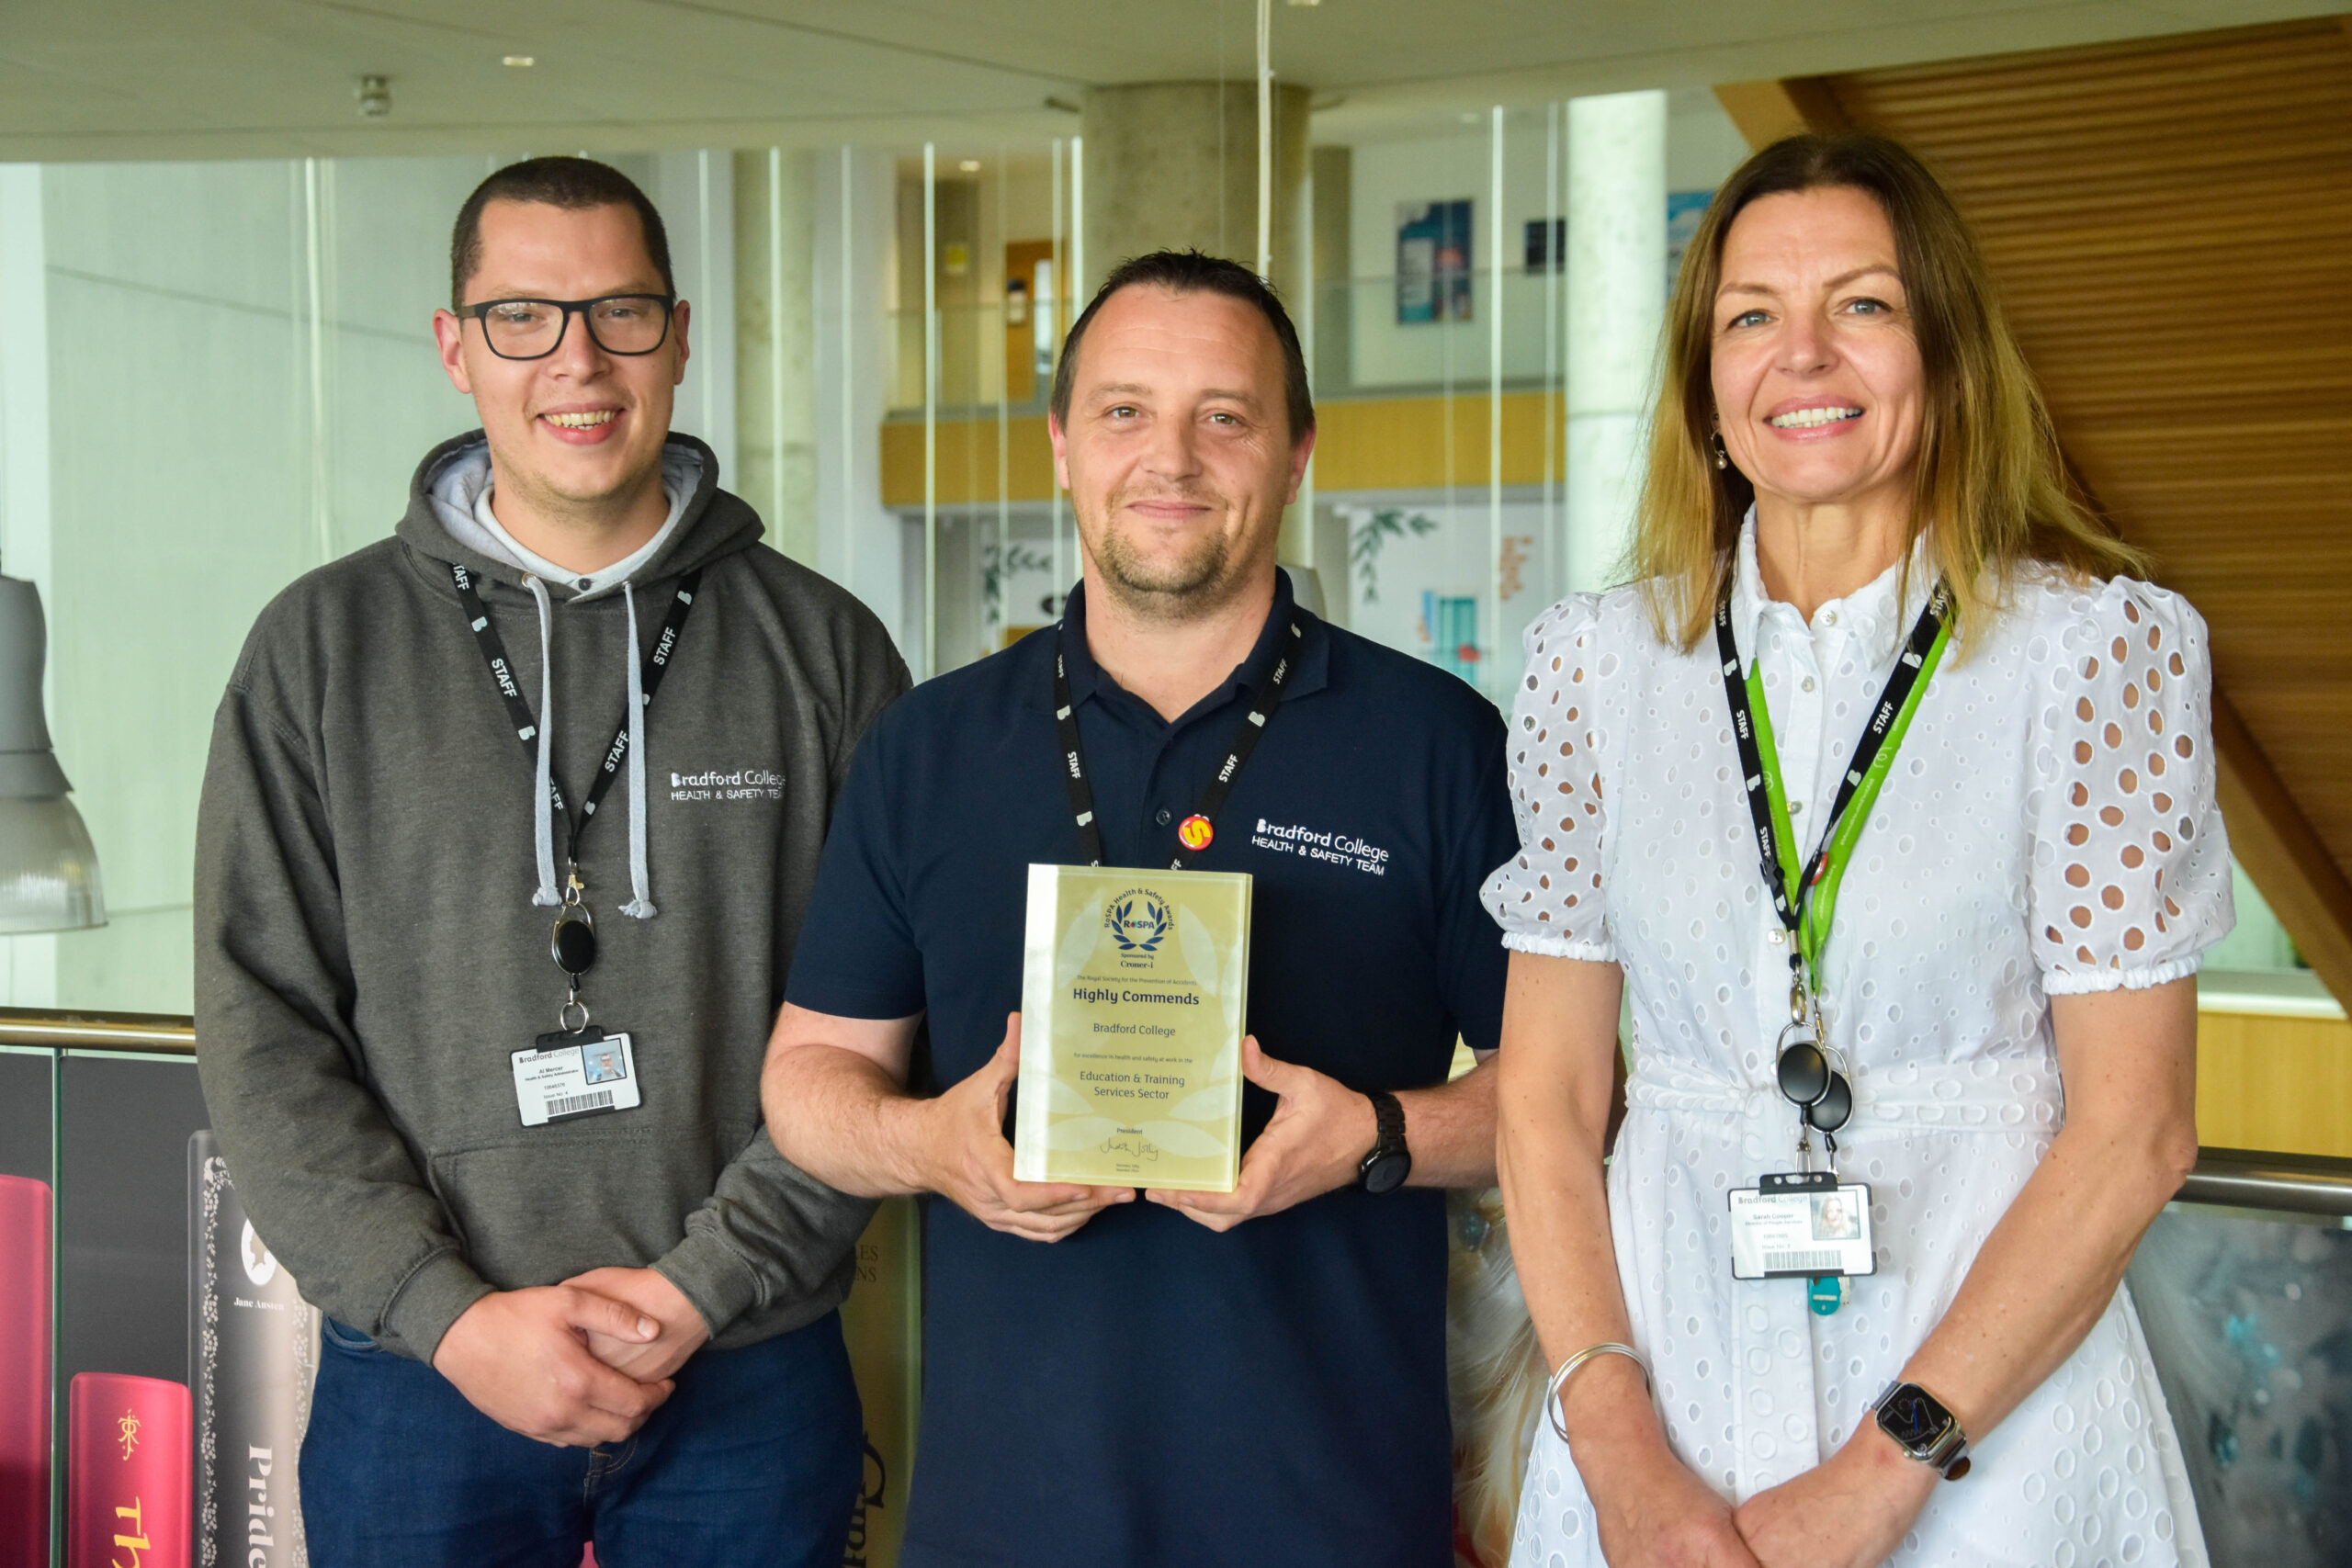 Bradford College Earns Prestigious RoSPA Health & Safety Award